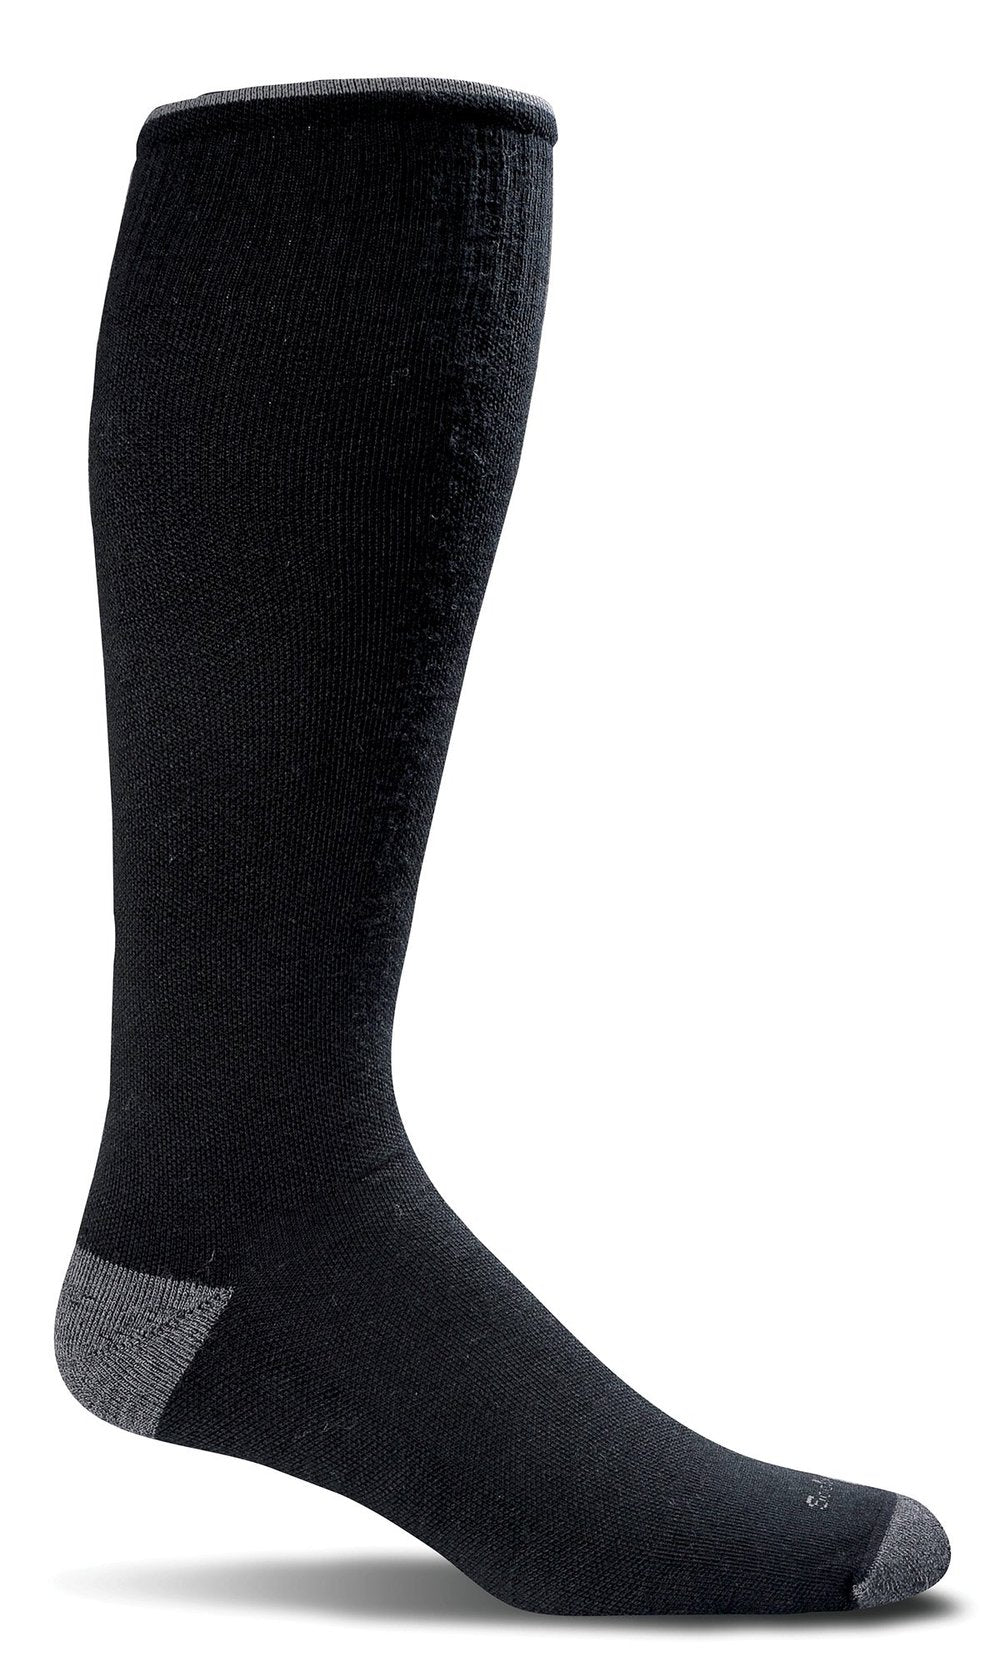 Sockwell - Men's Moderate Graduated Compression Socks - Circulator Black